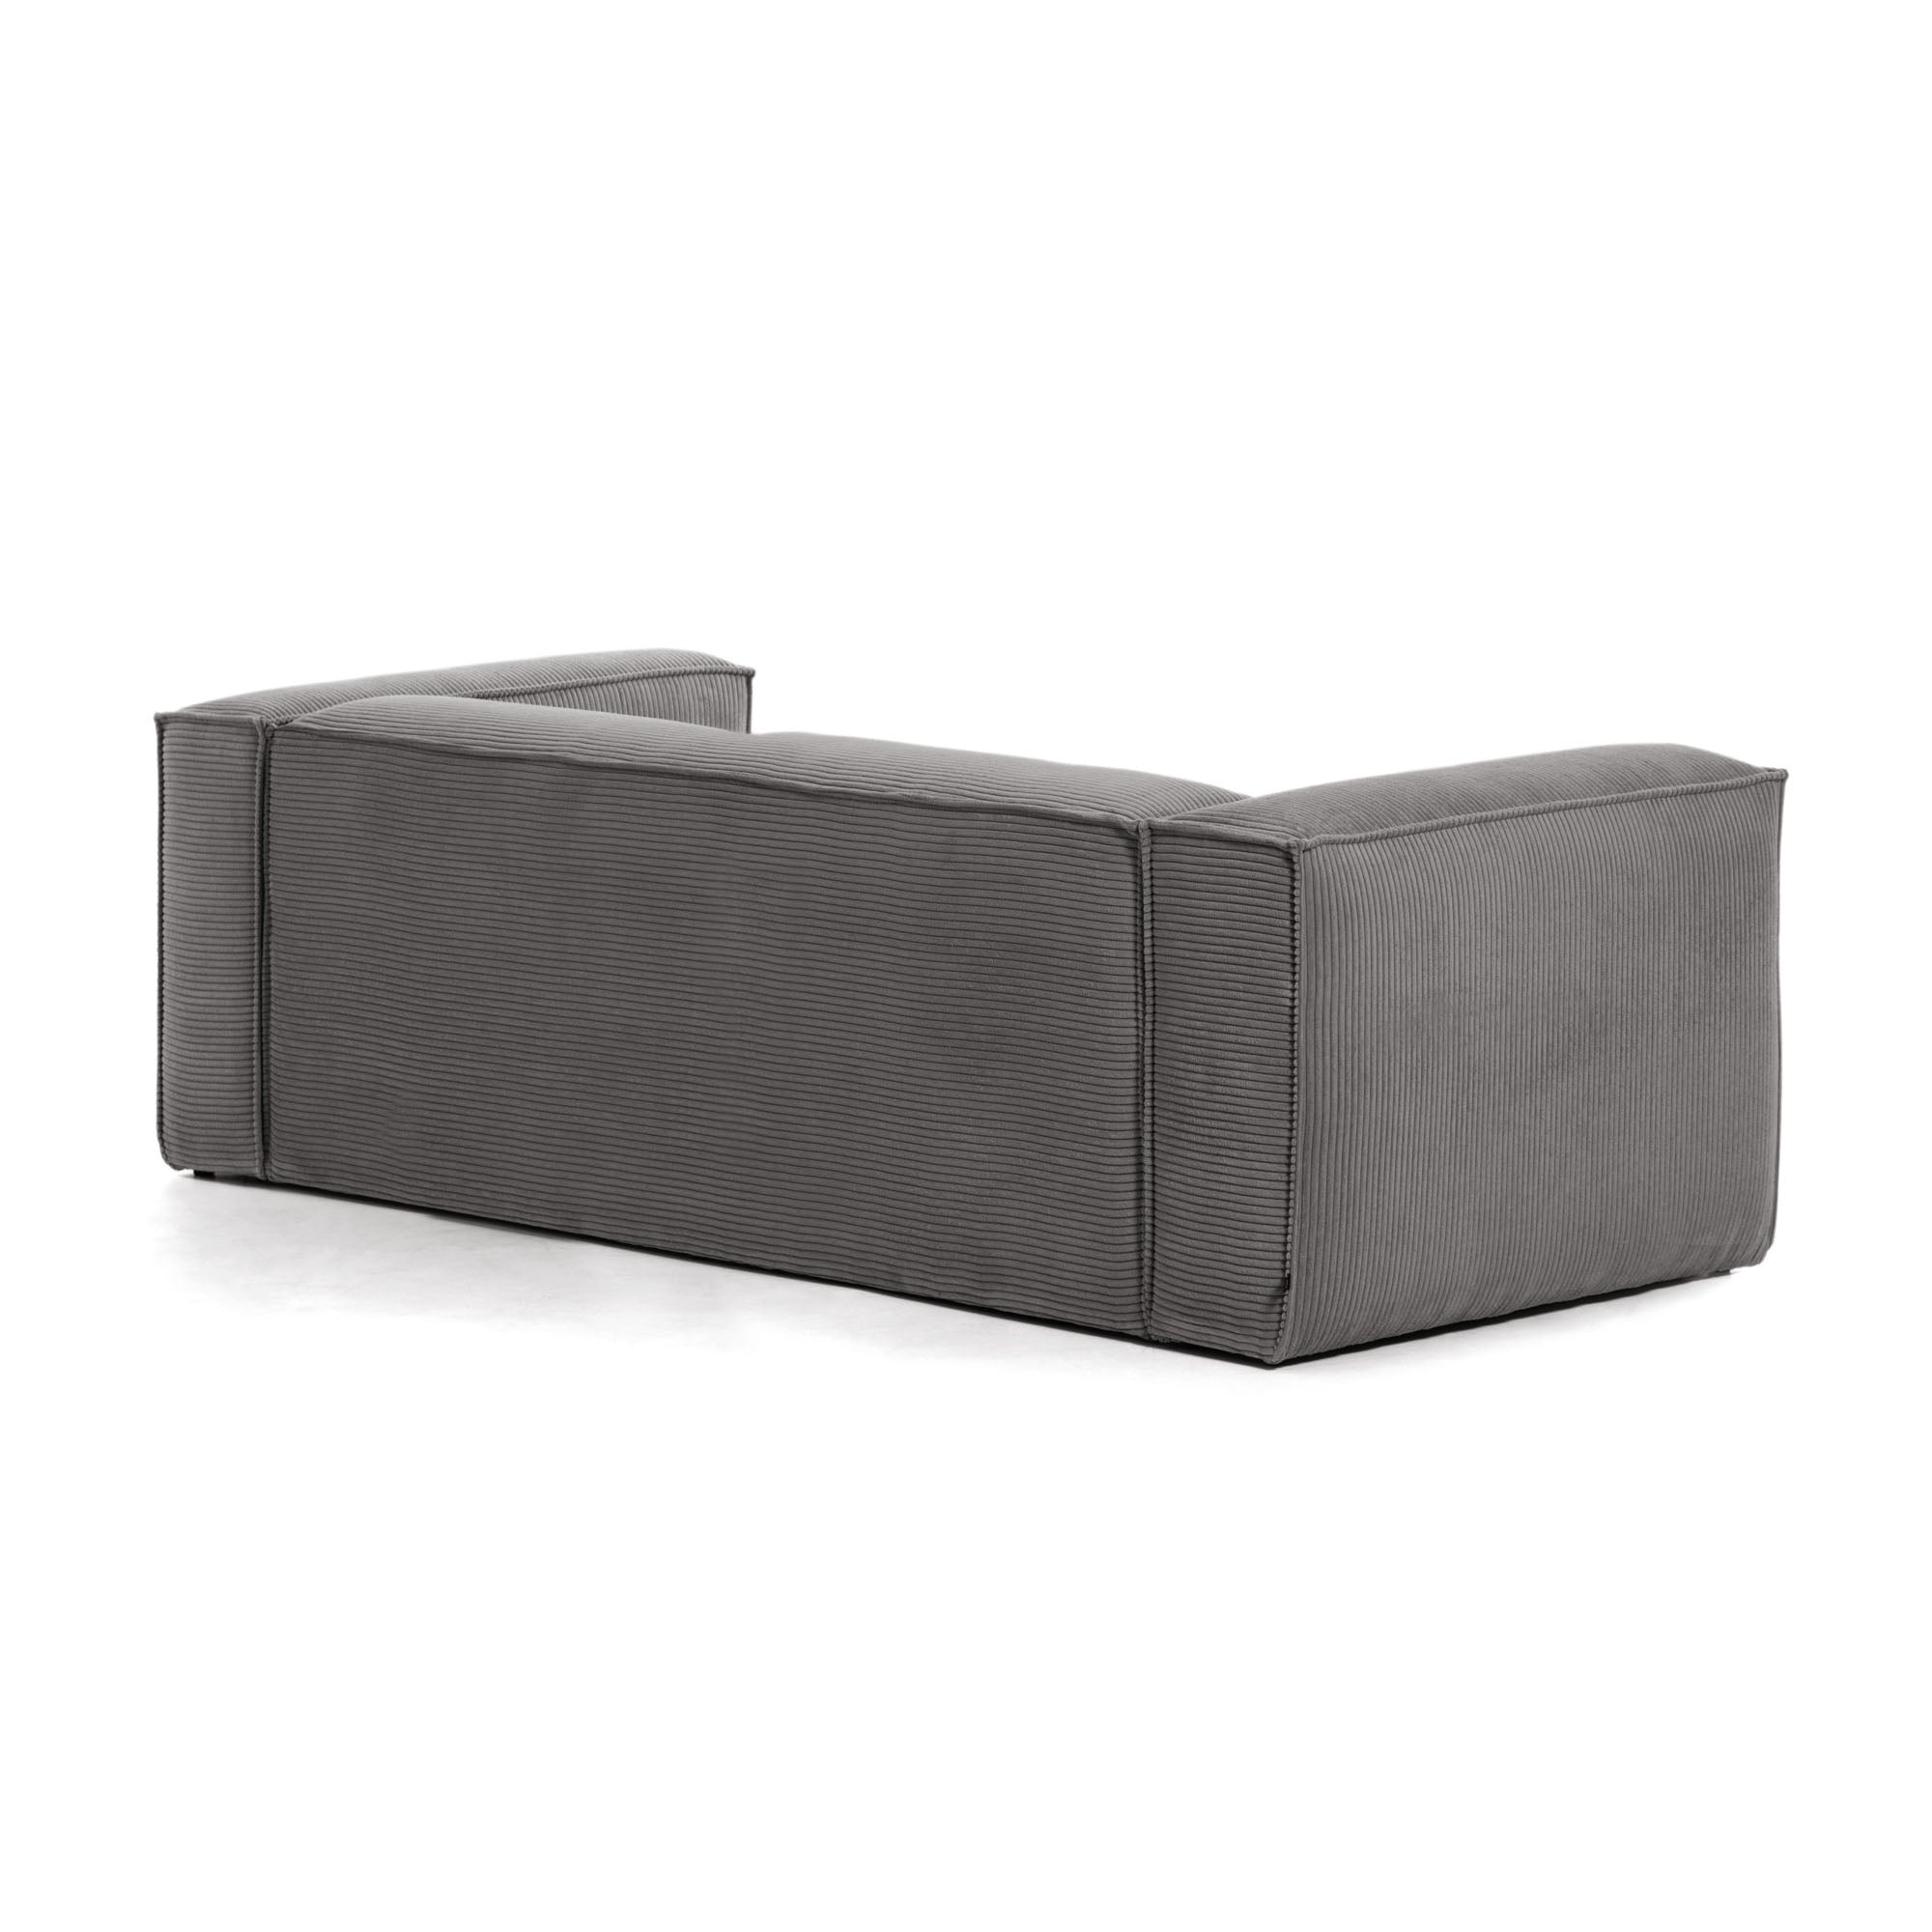 Blok 3 seater sofa in grey wide seam corduroy, 240 cm